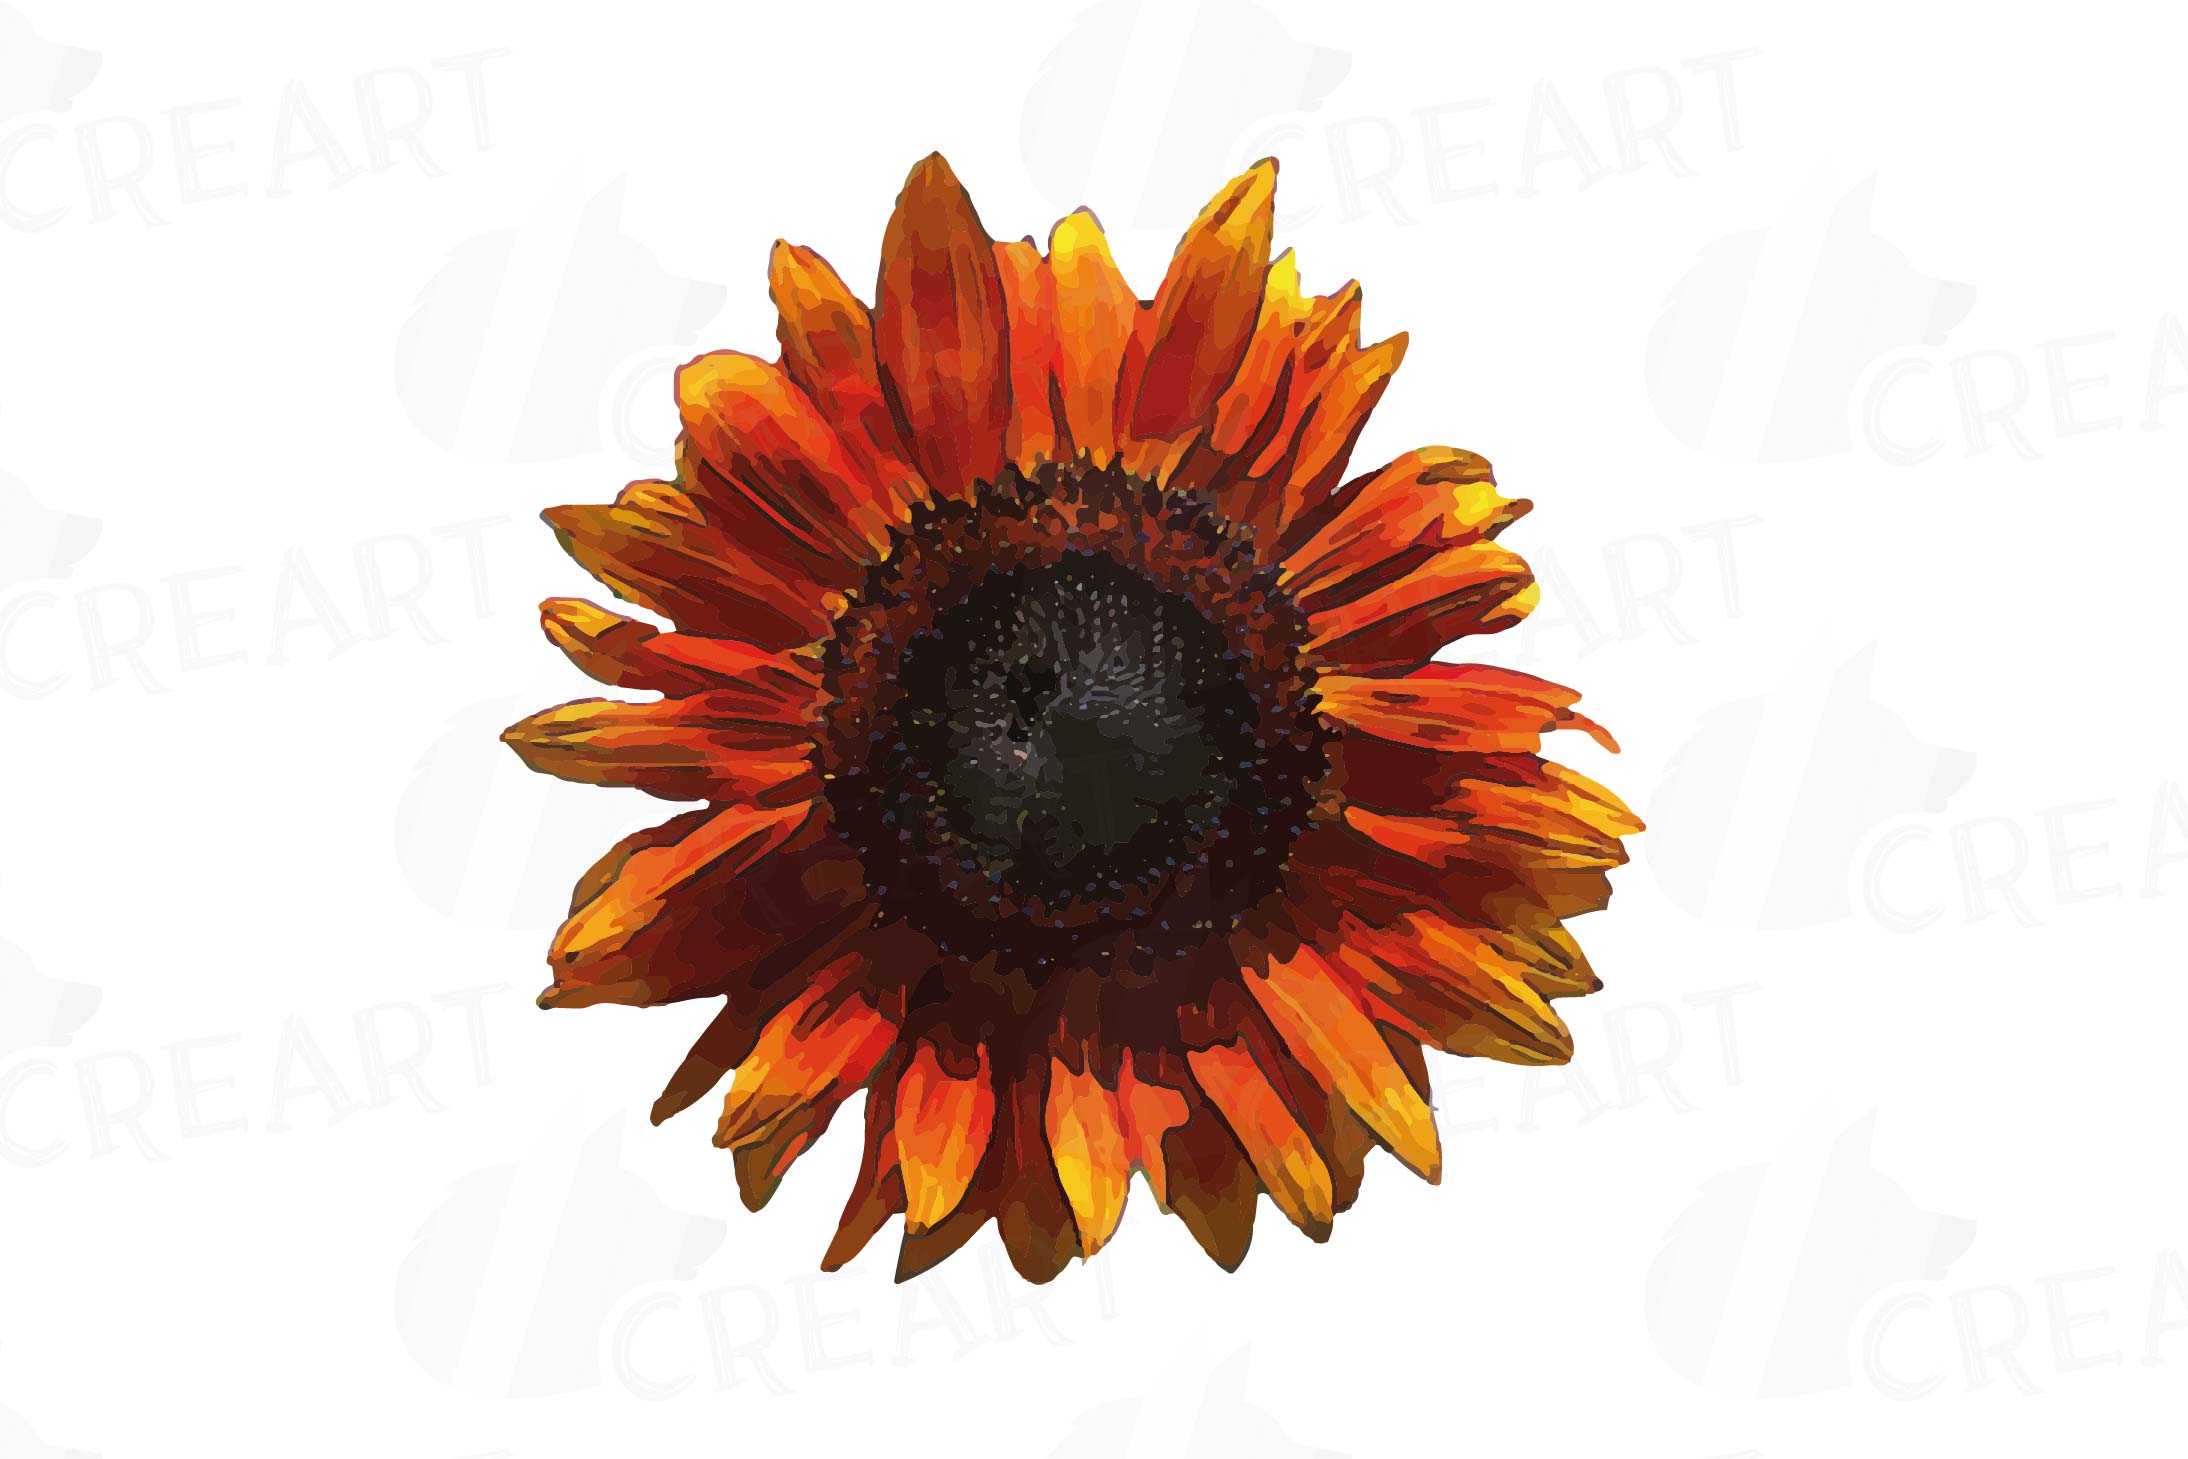 Download Sunflower watercolor clip art pack, watercolor sunflower ...